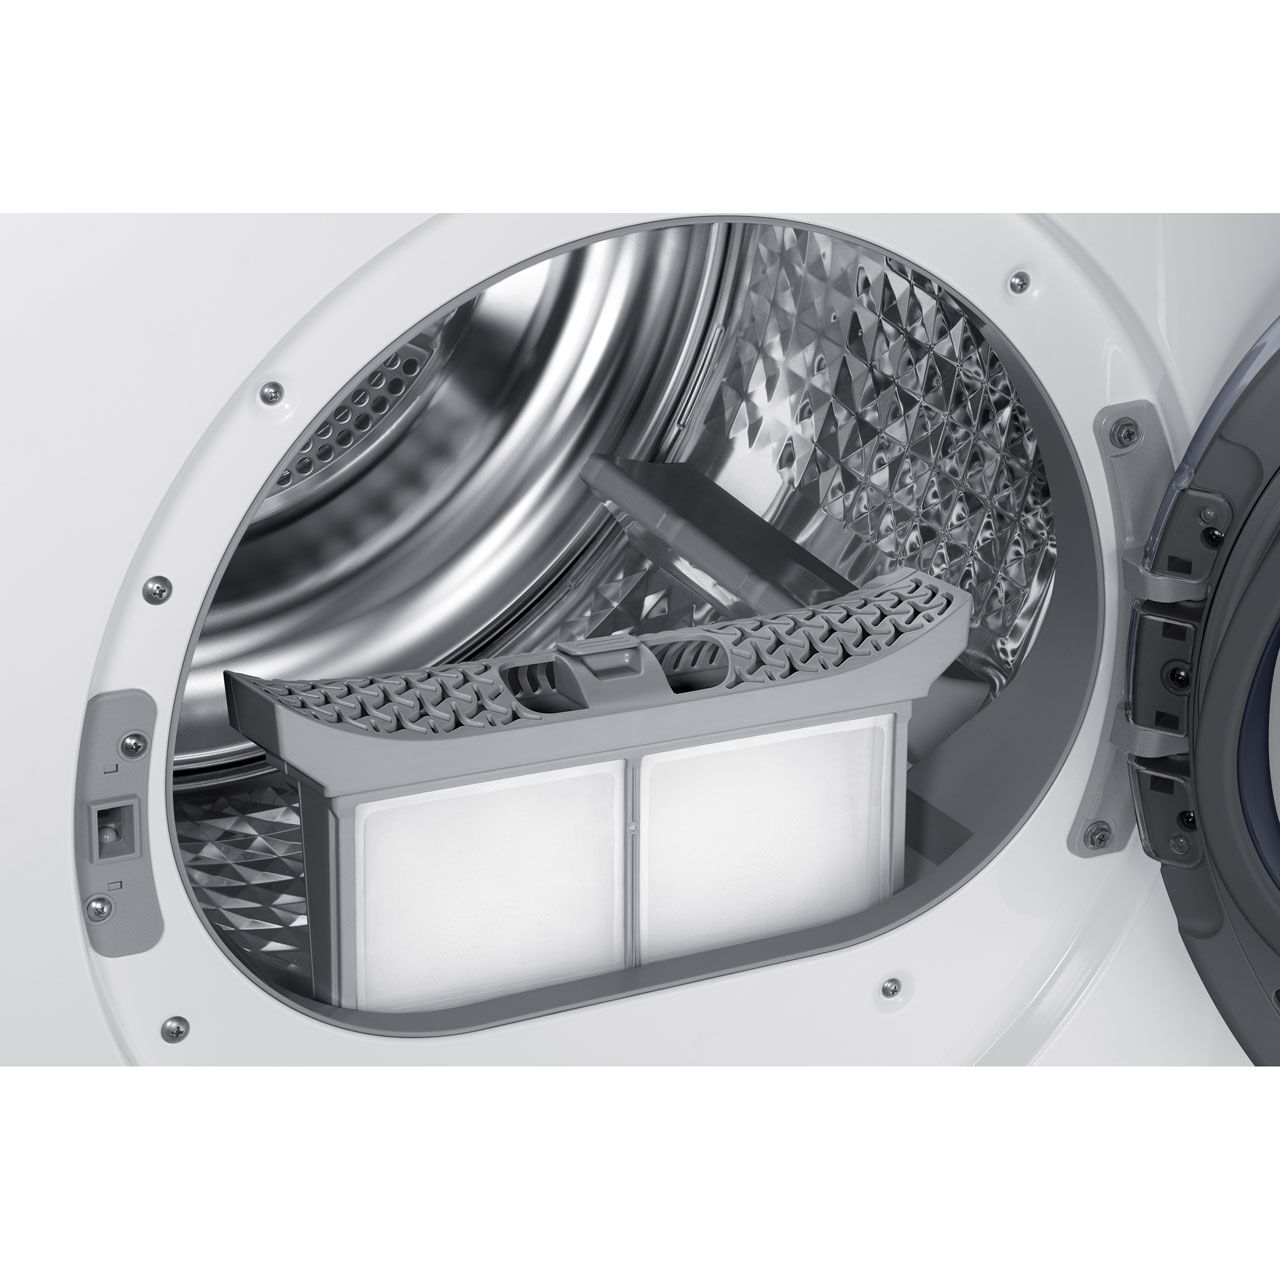 Samsung DV80M5013QW 8Kg Heat Pump Tumble Dryer Review